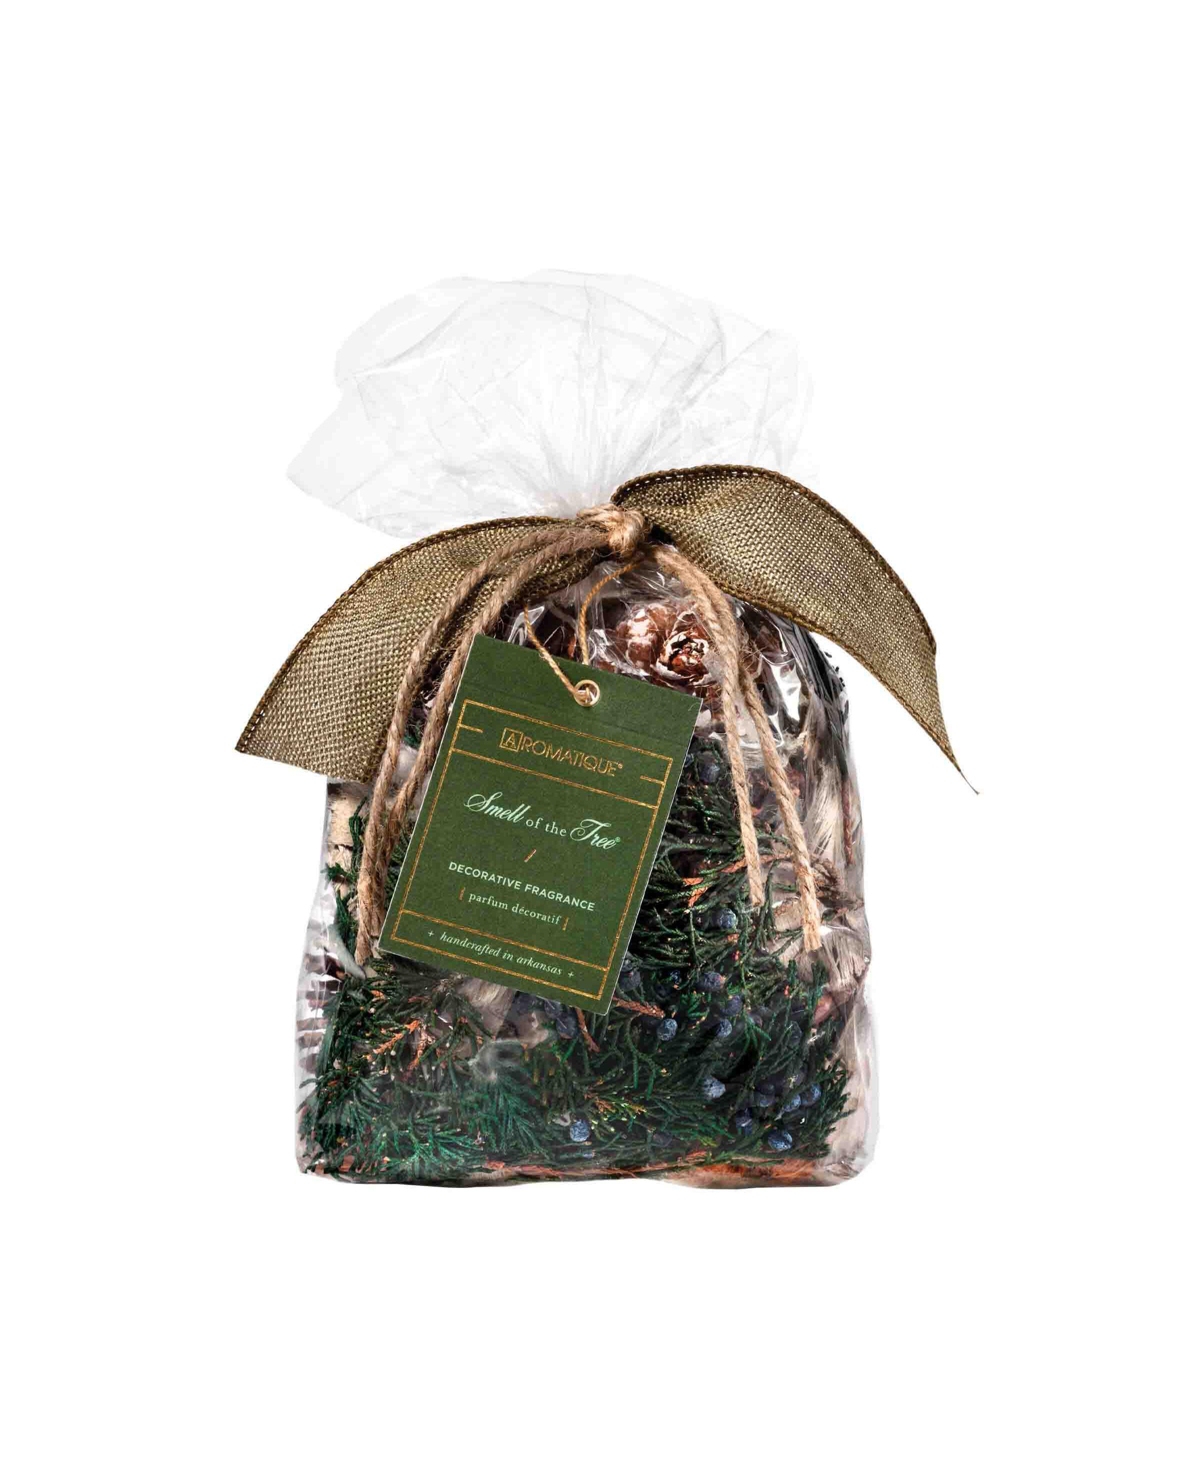 Aromatique The Smell of Tree Potpourri Bag